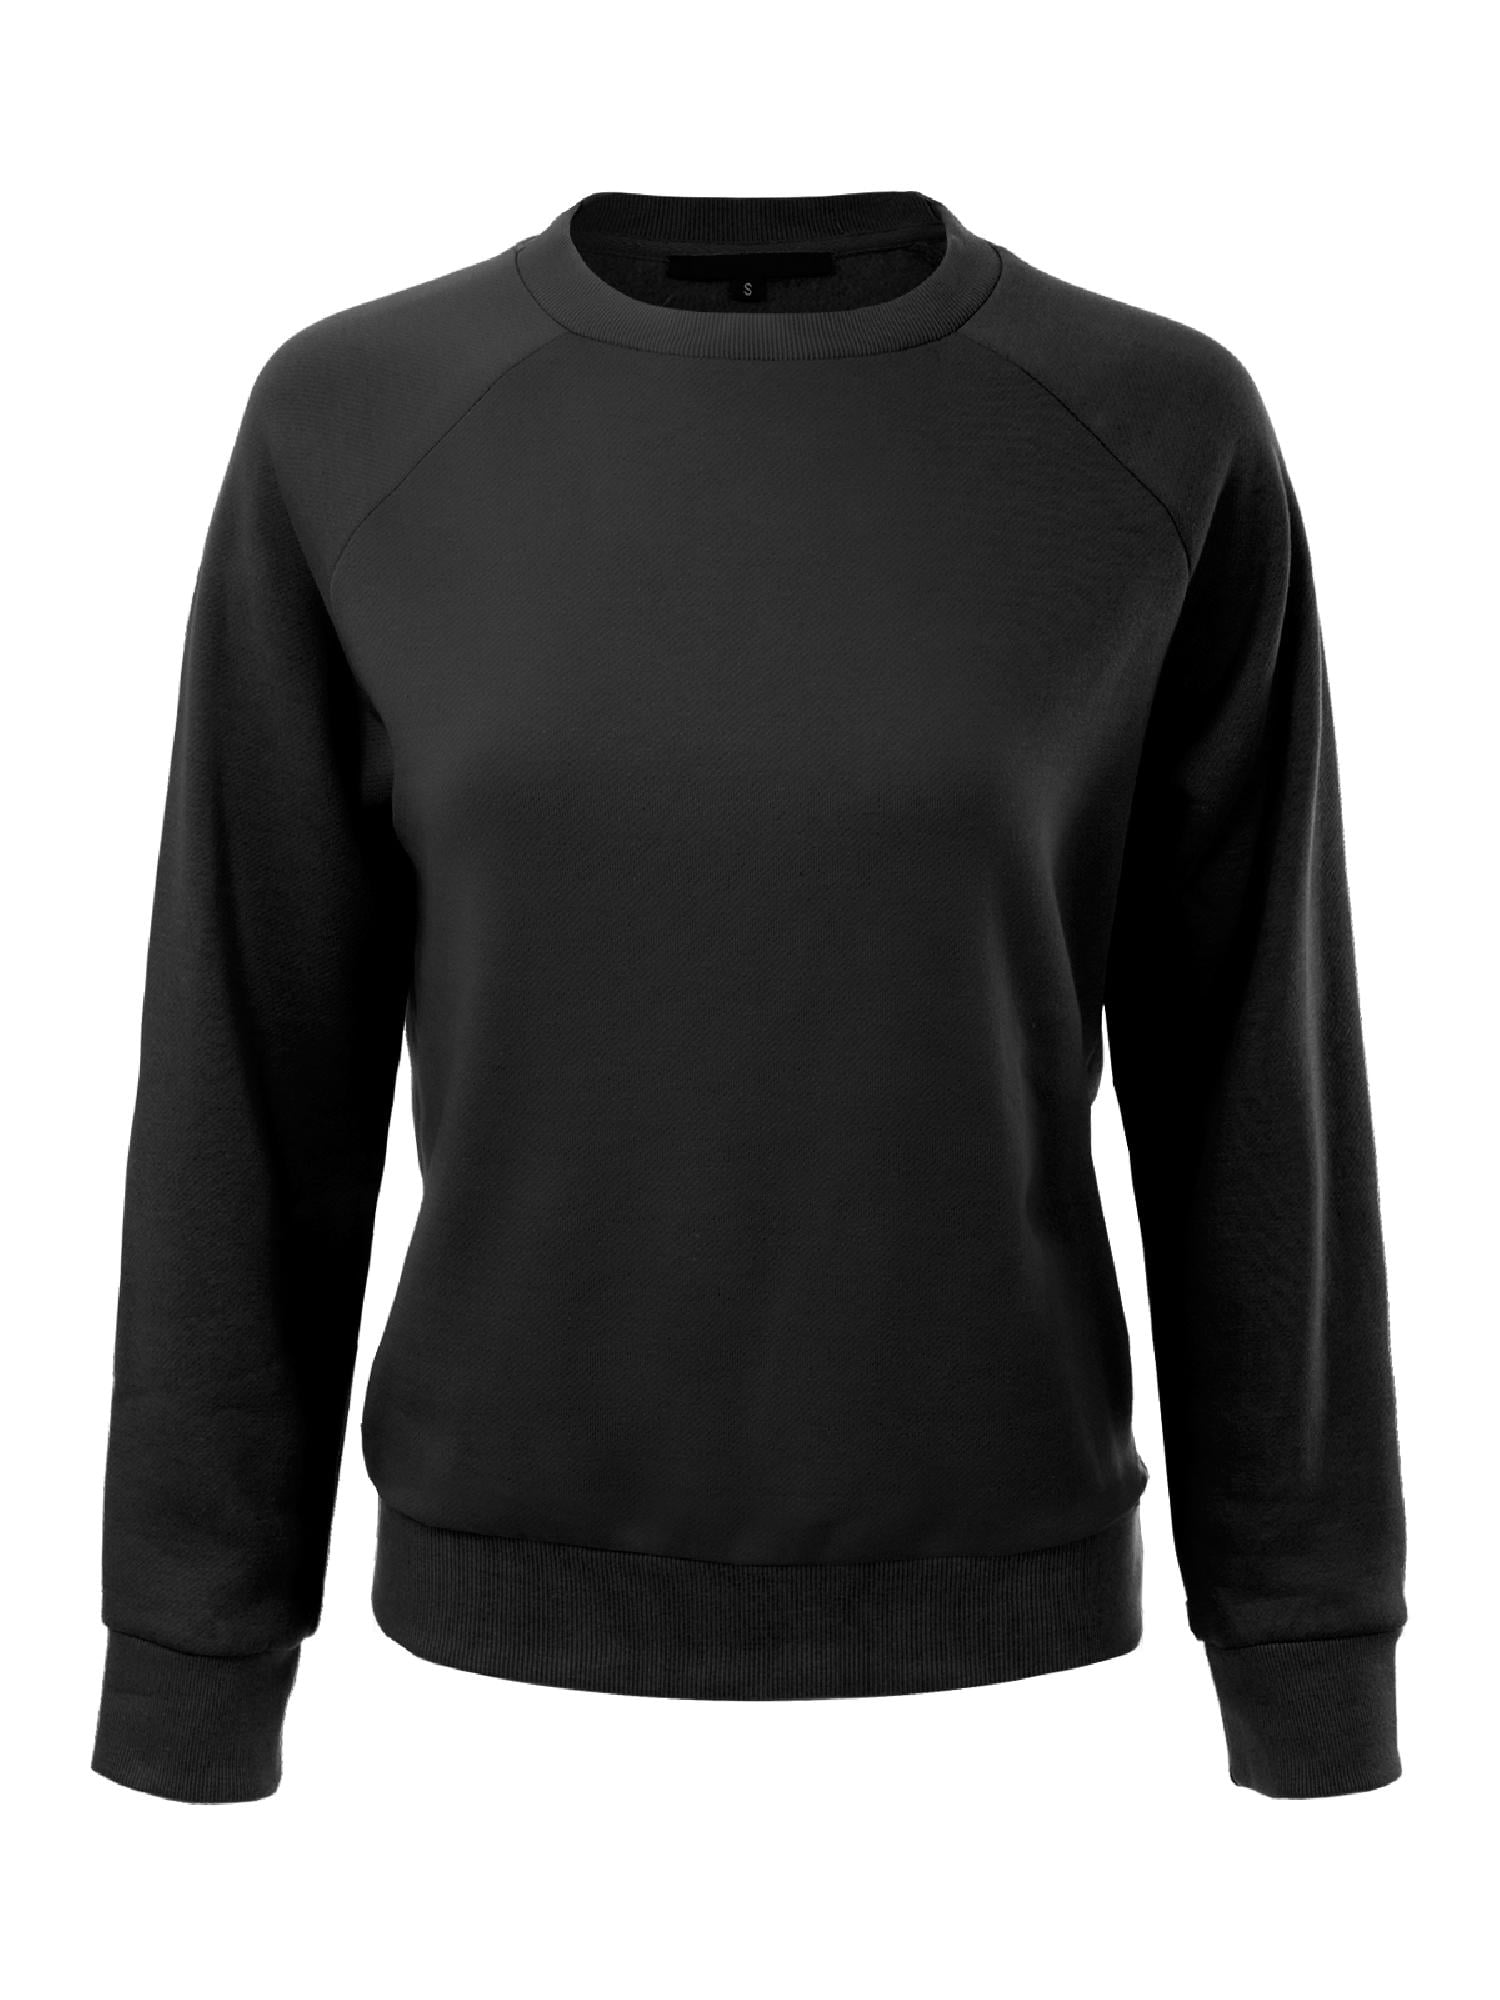 Crewneck Woman Up Unisex Sweatshirt #3311 